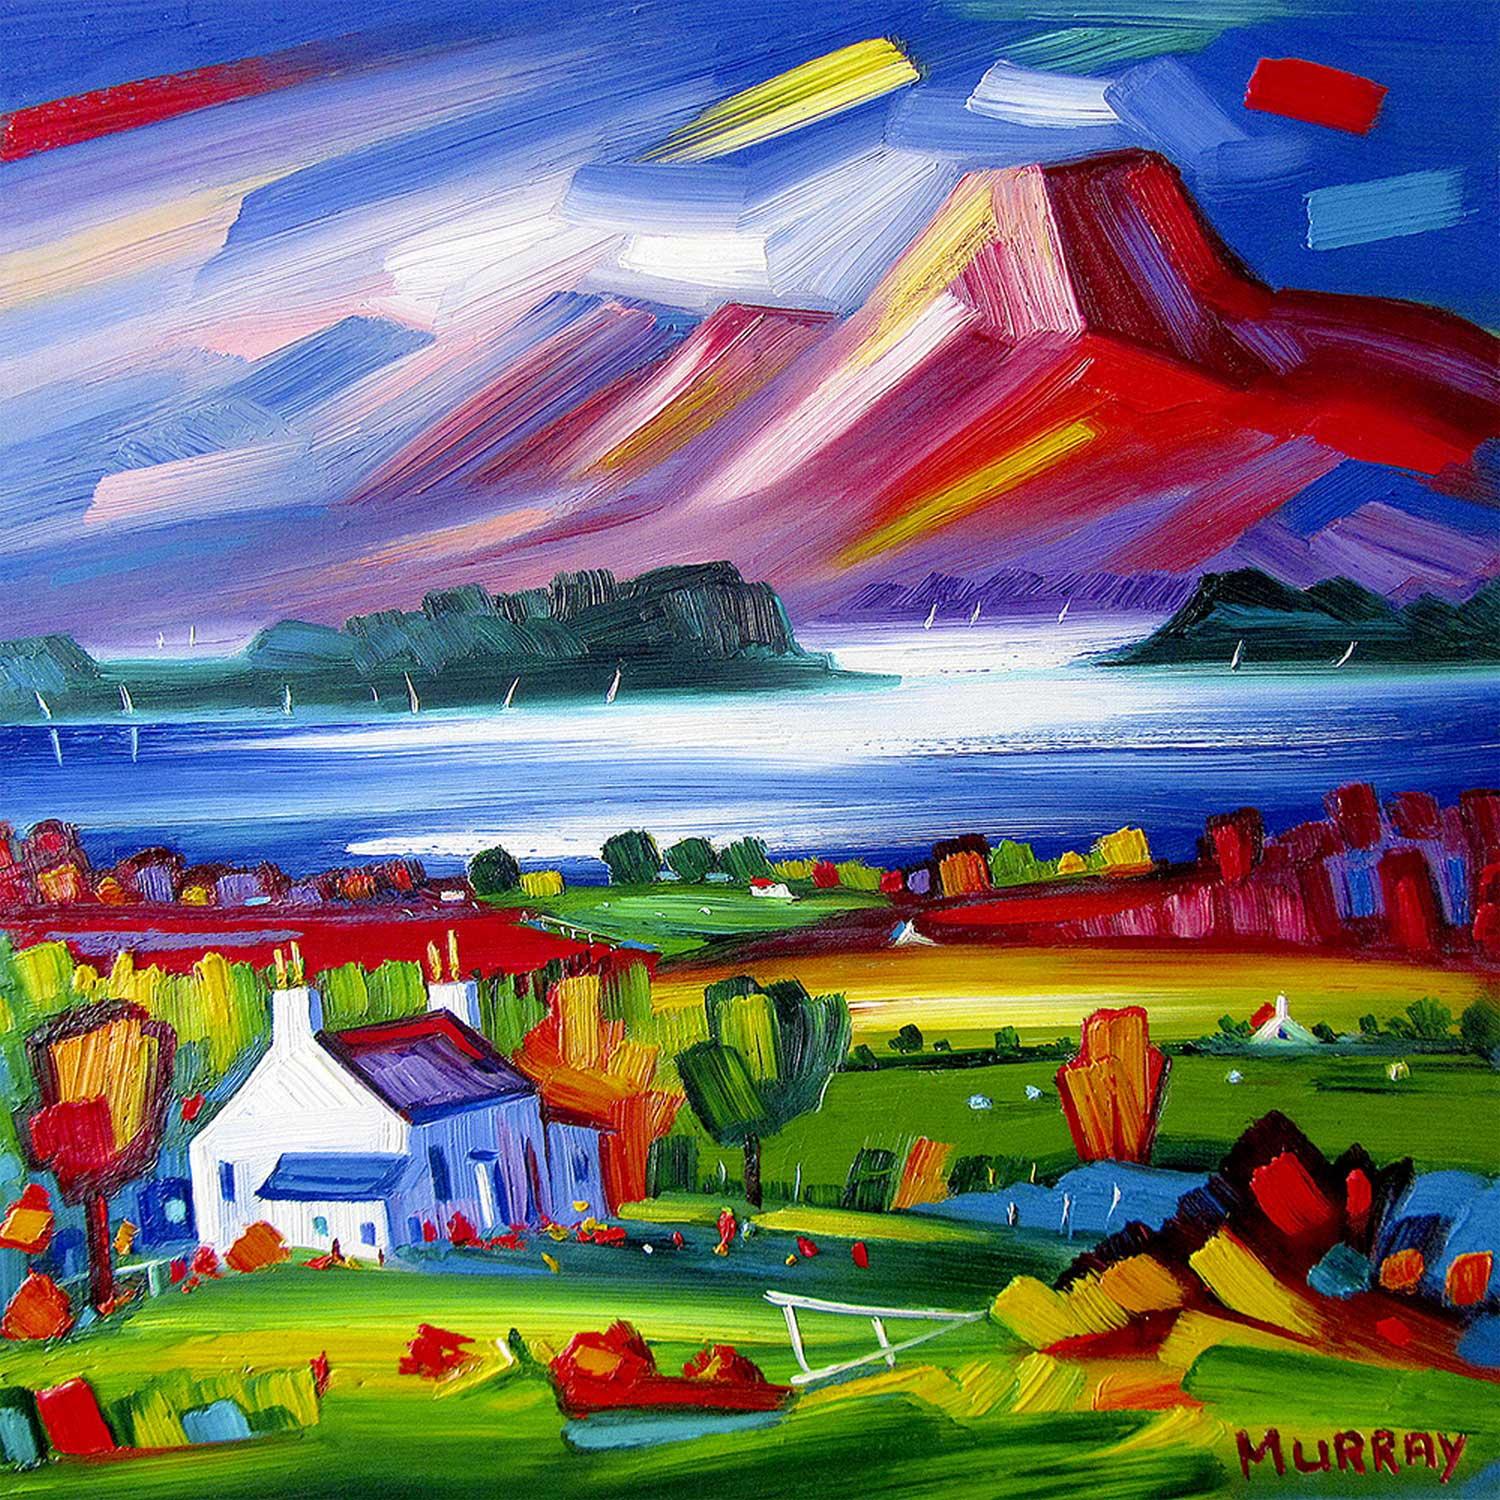 Loch Lomond by artist Raymond Murray